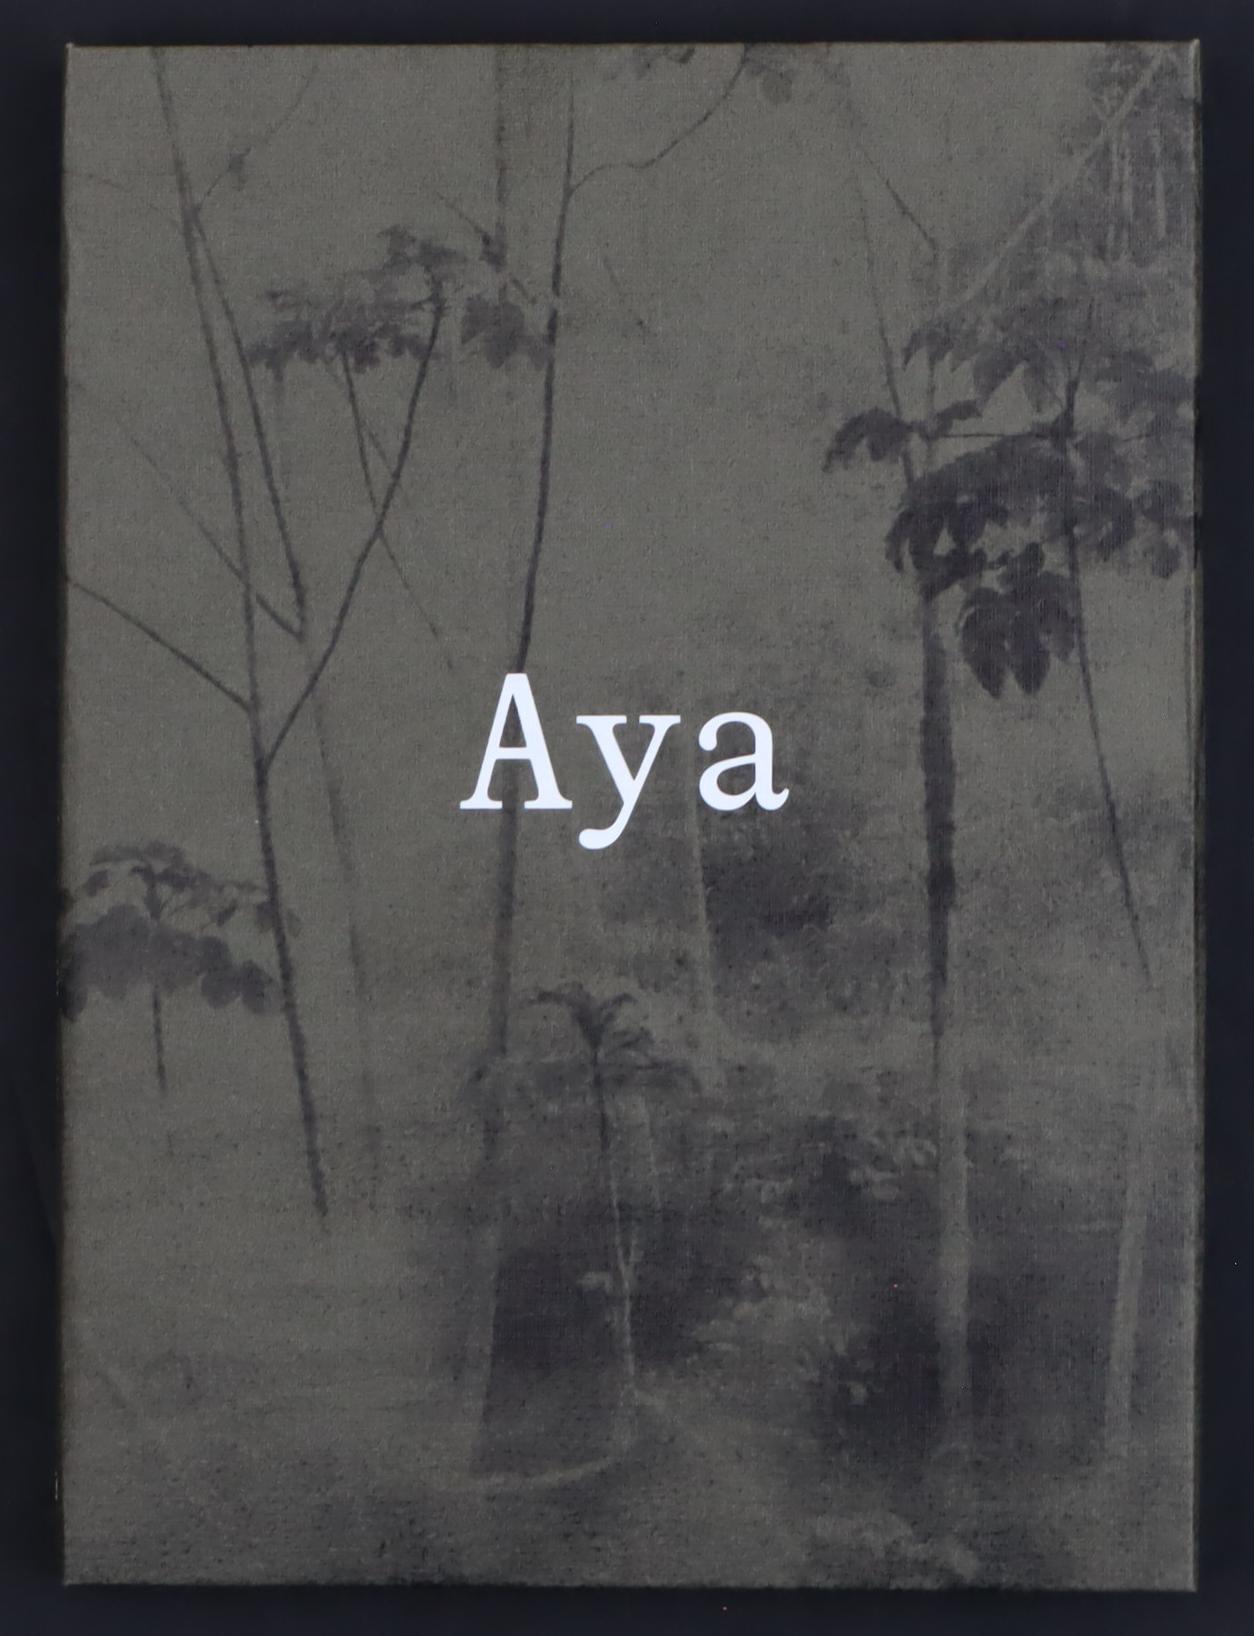 "Aya" by Yann Gross & Arguiñe Escandón © Tommy Geanakos